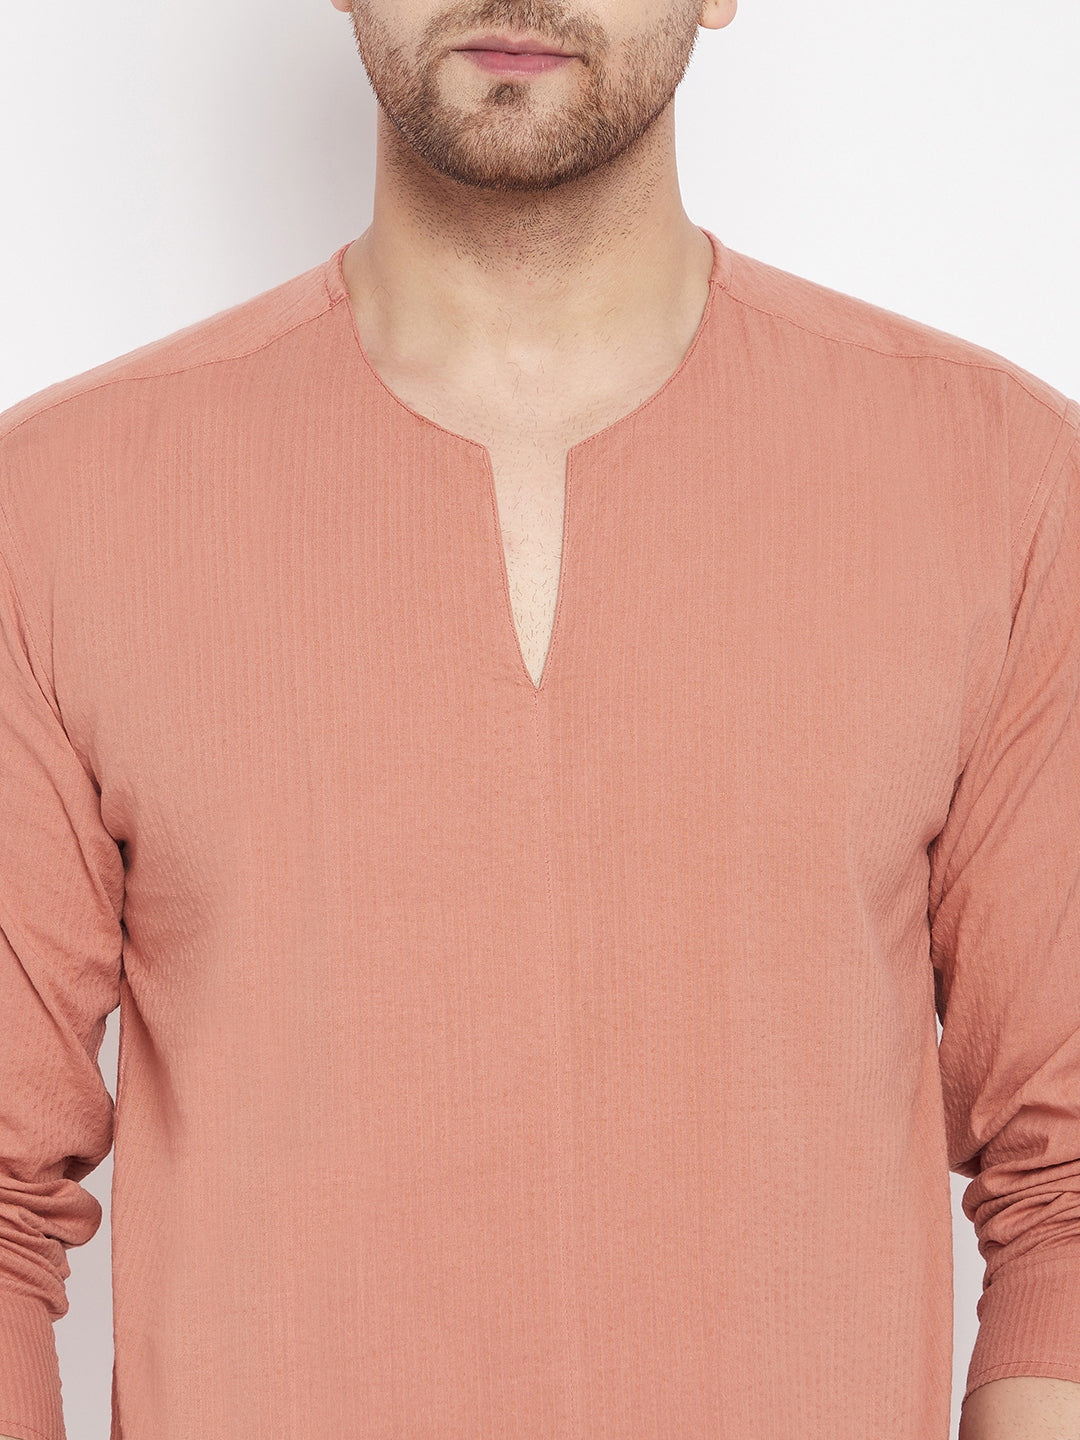 Men's Brown Color Kurta with Slit Neckline - Even Apparels